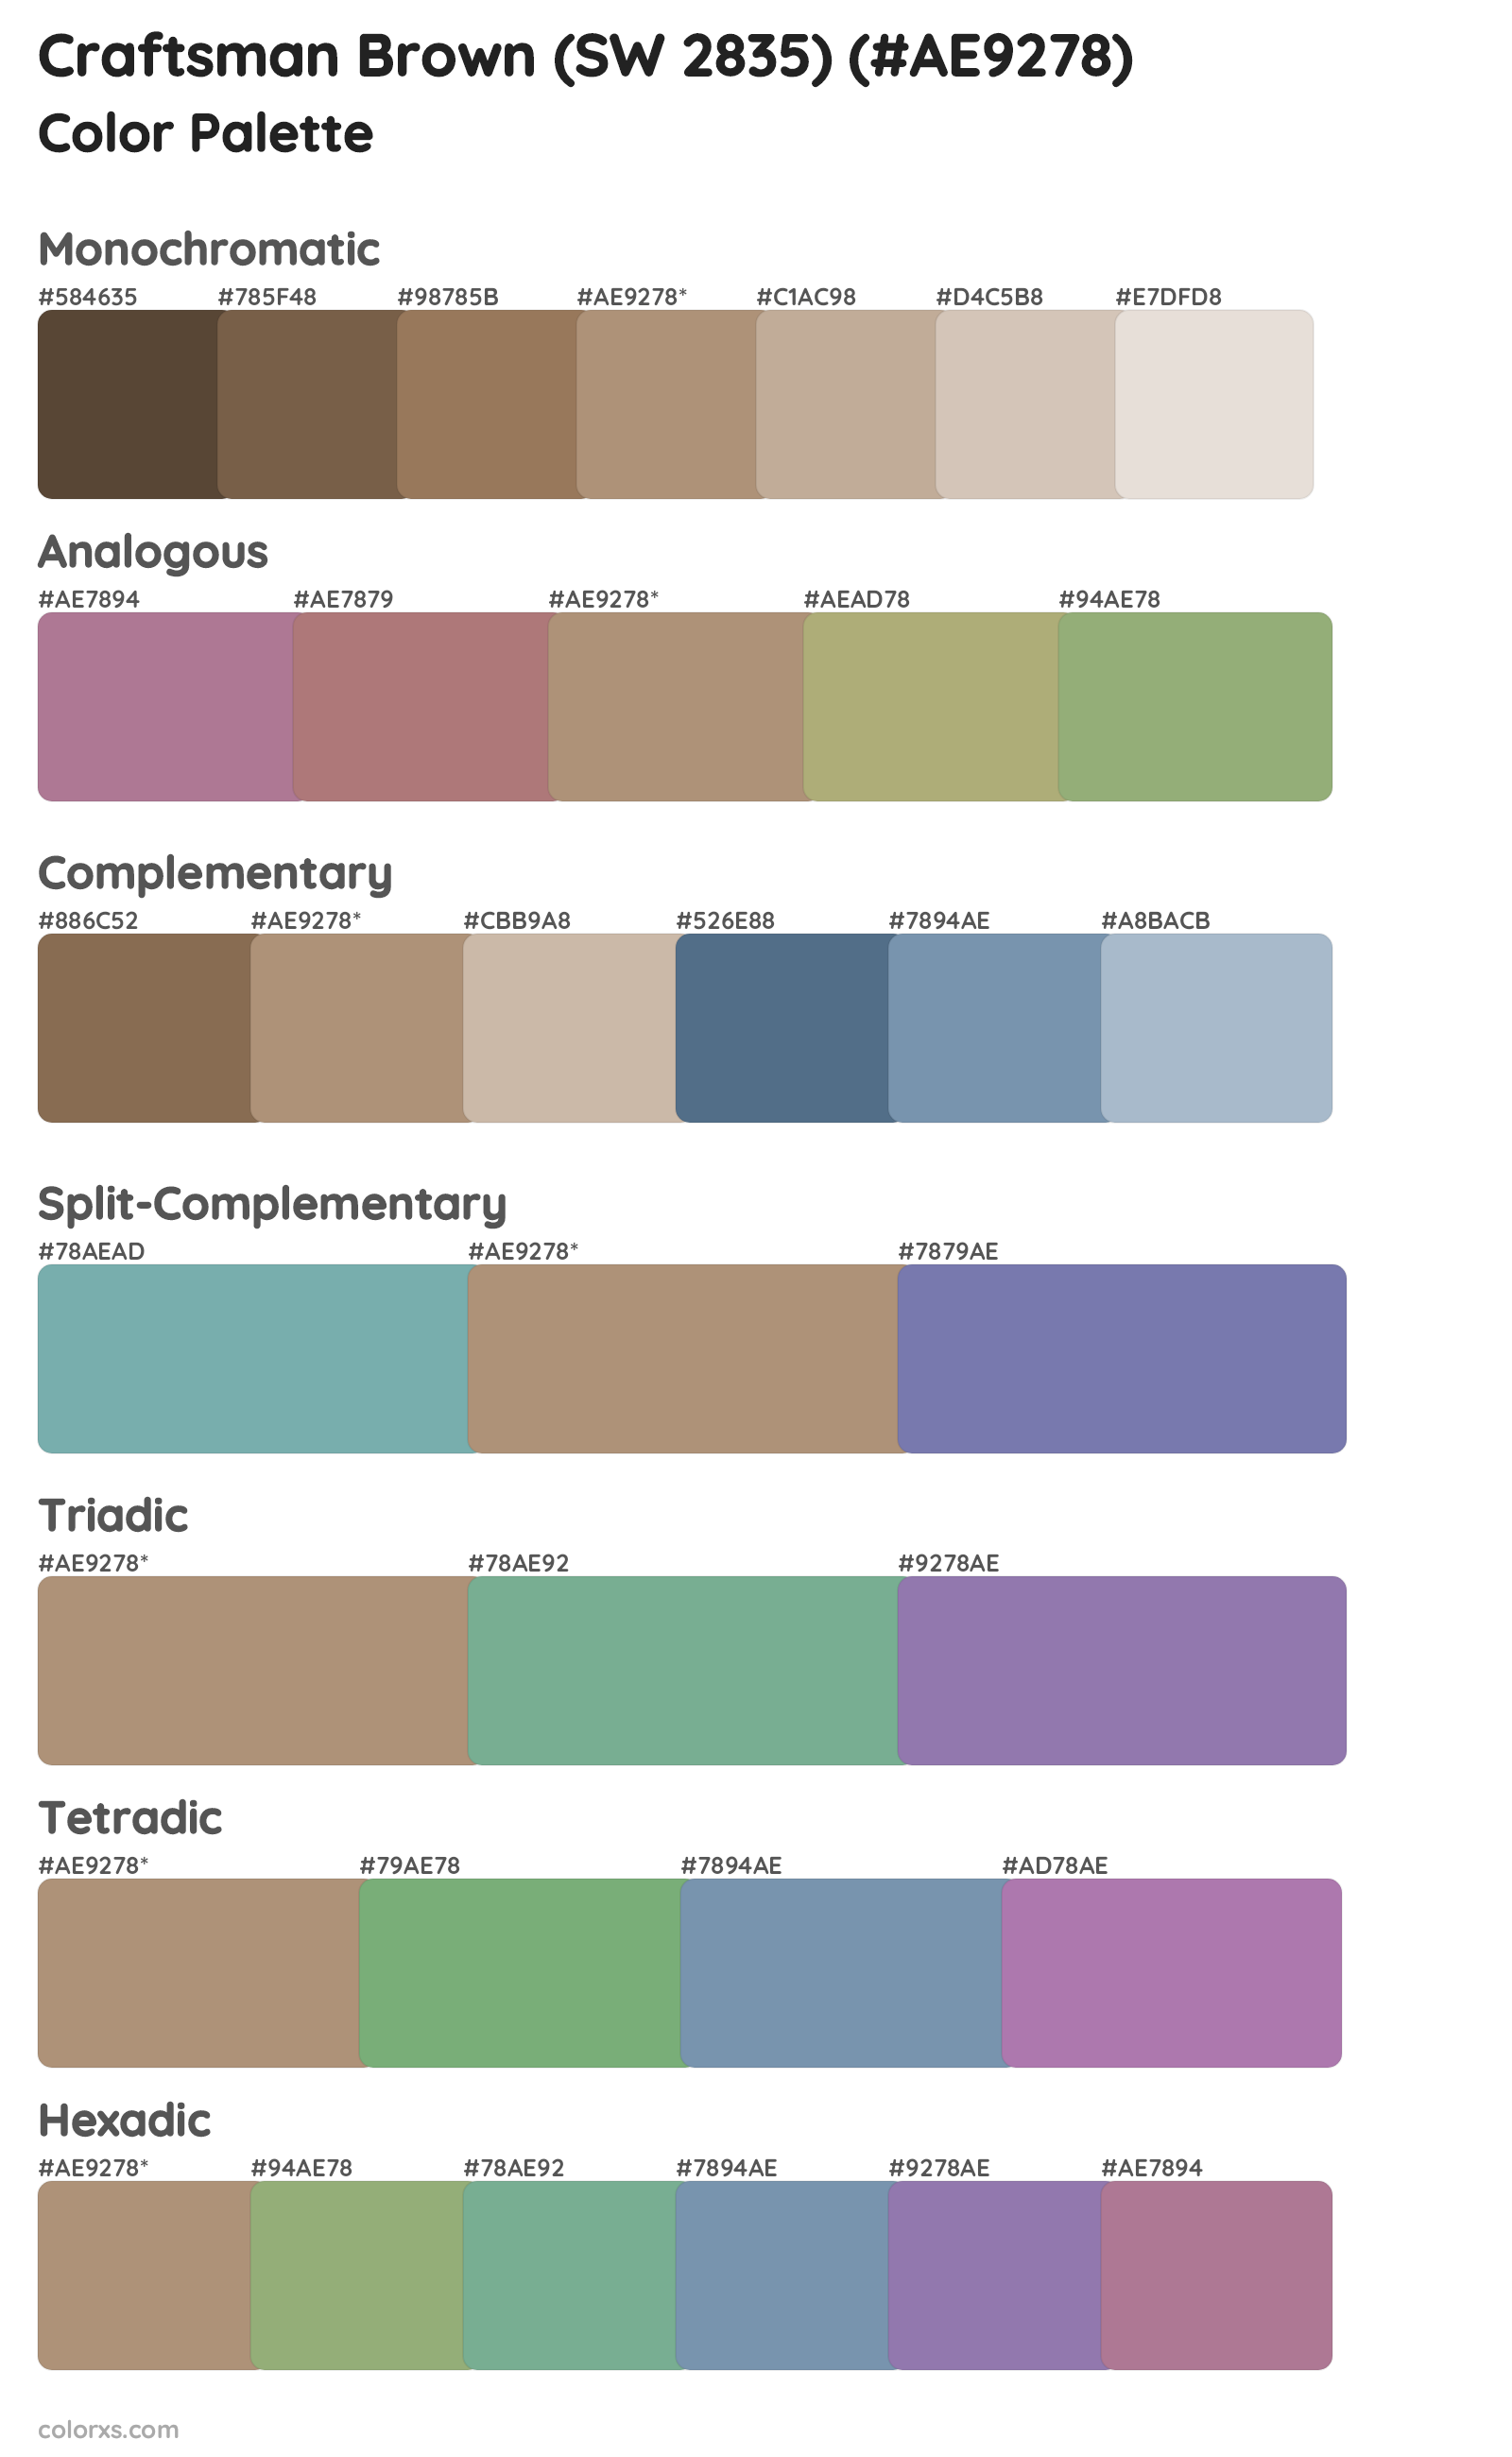 Craftsman Brown (SW 2835) Color Scheme Palettes